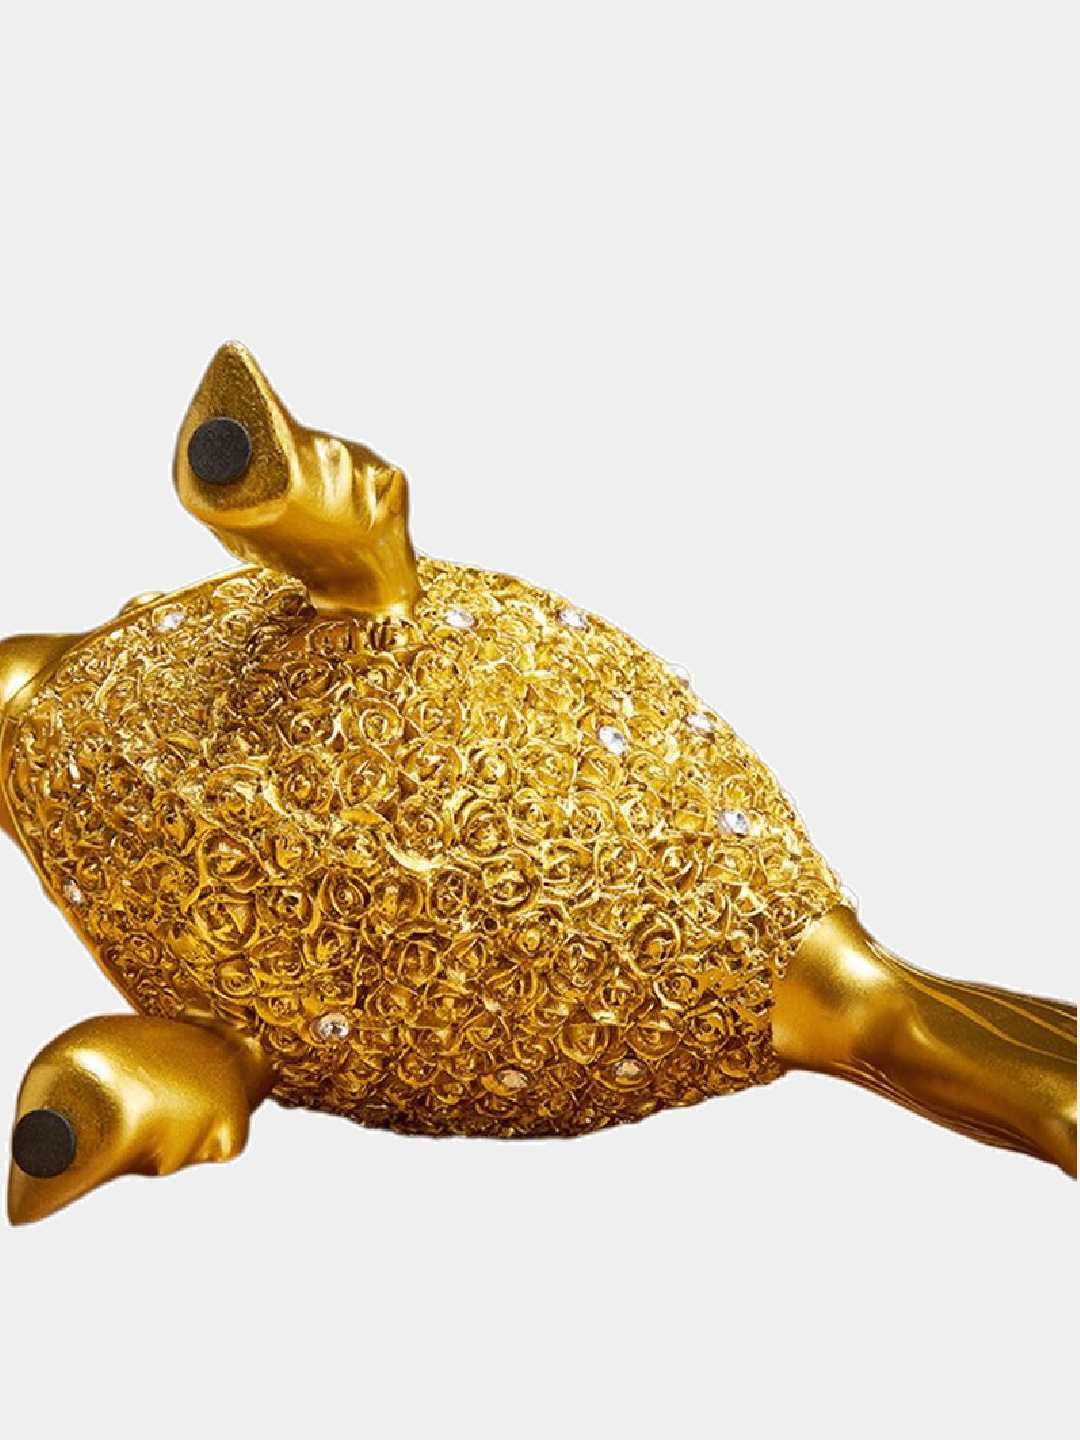 Статуэтка "Золотые рыбы"